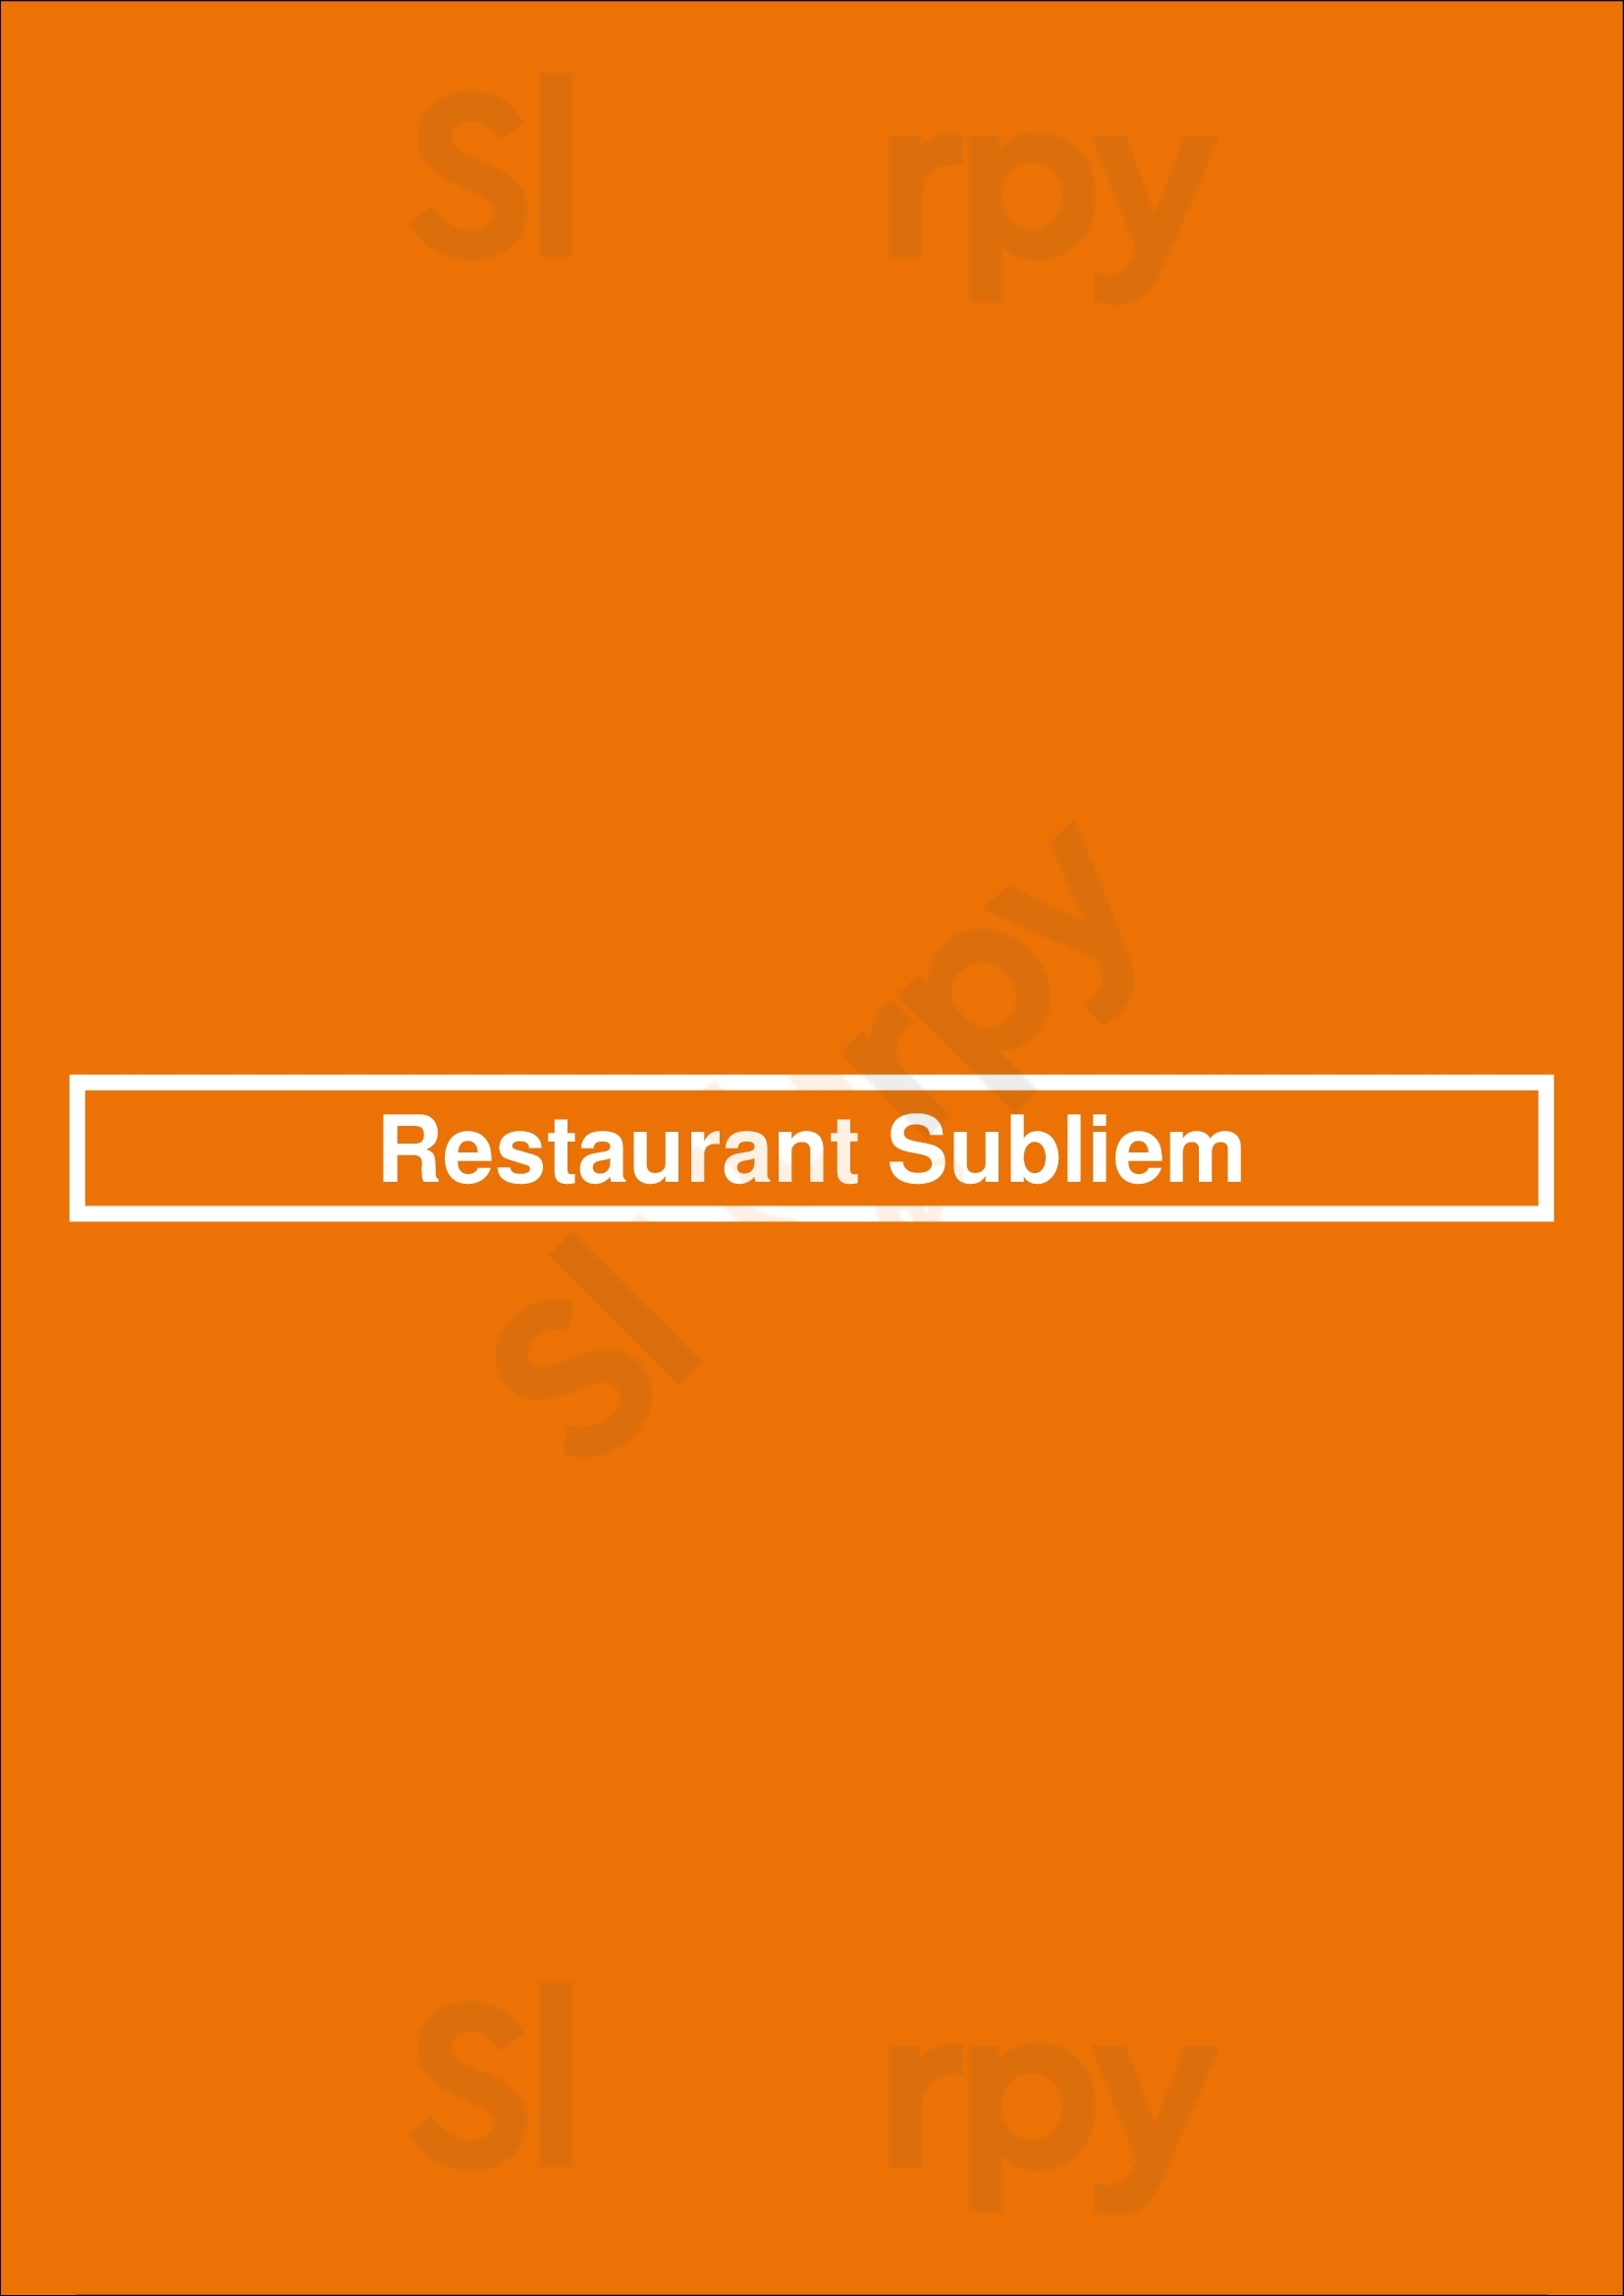 Restaurant Subliem Haarlem Menu - 1